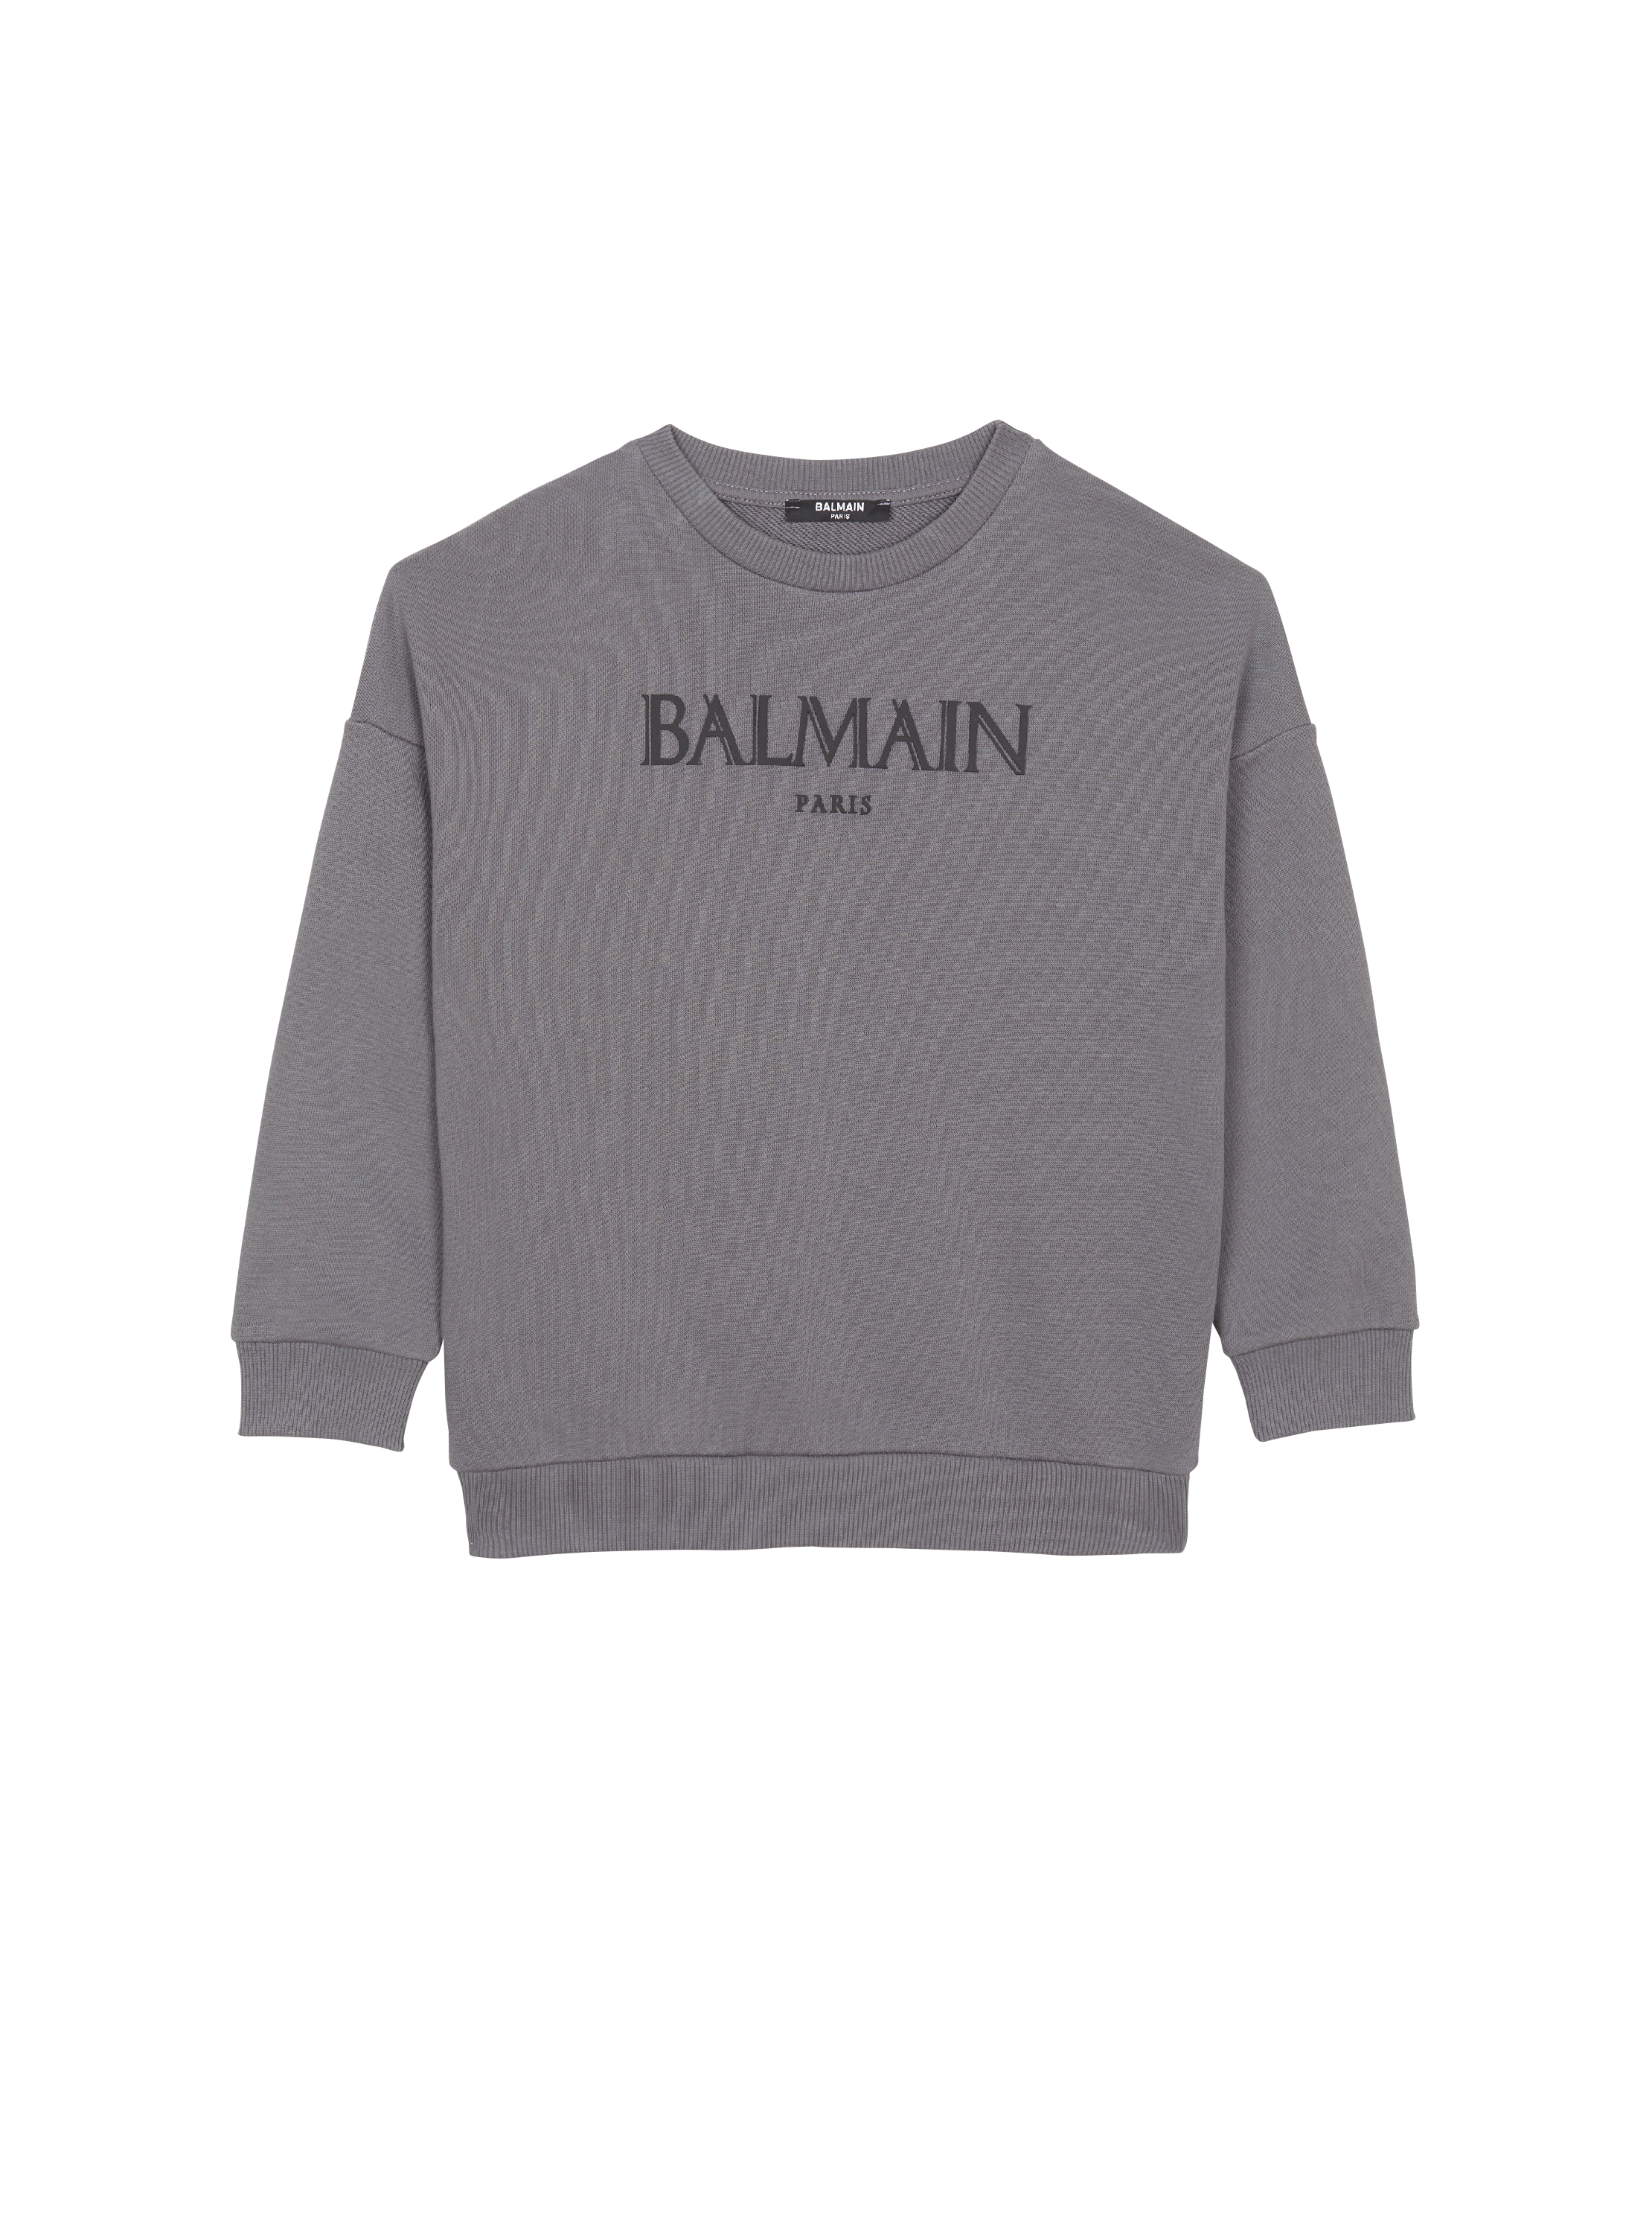 Roman Balmain sweatshirt